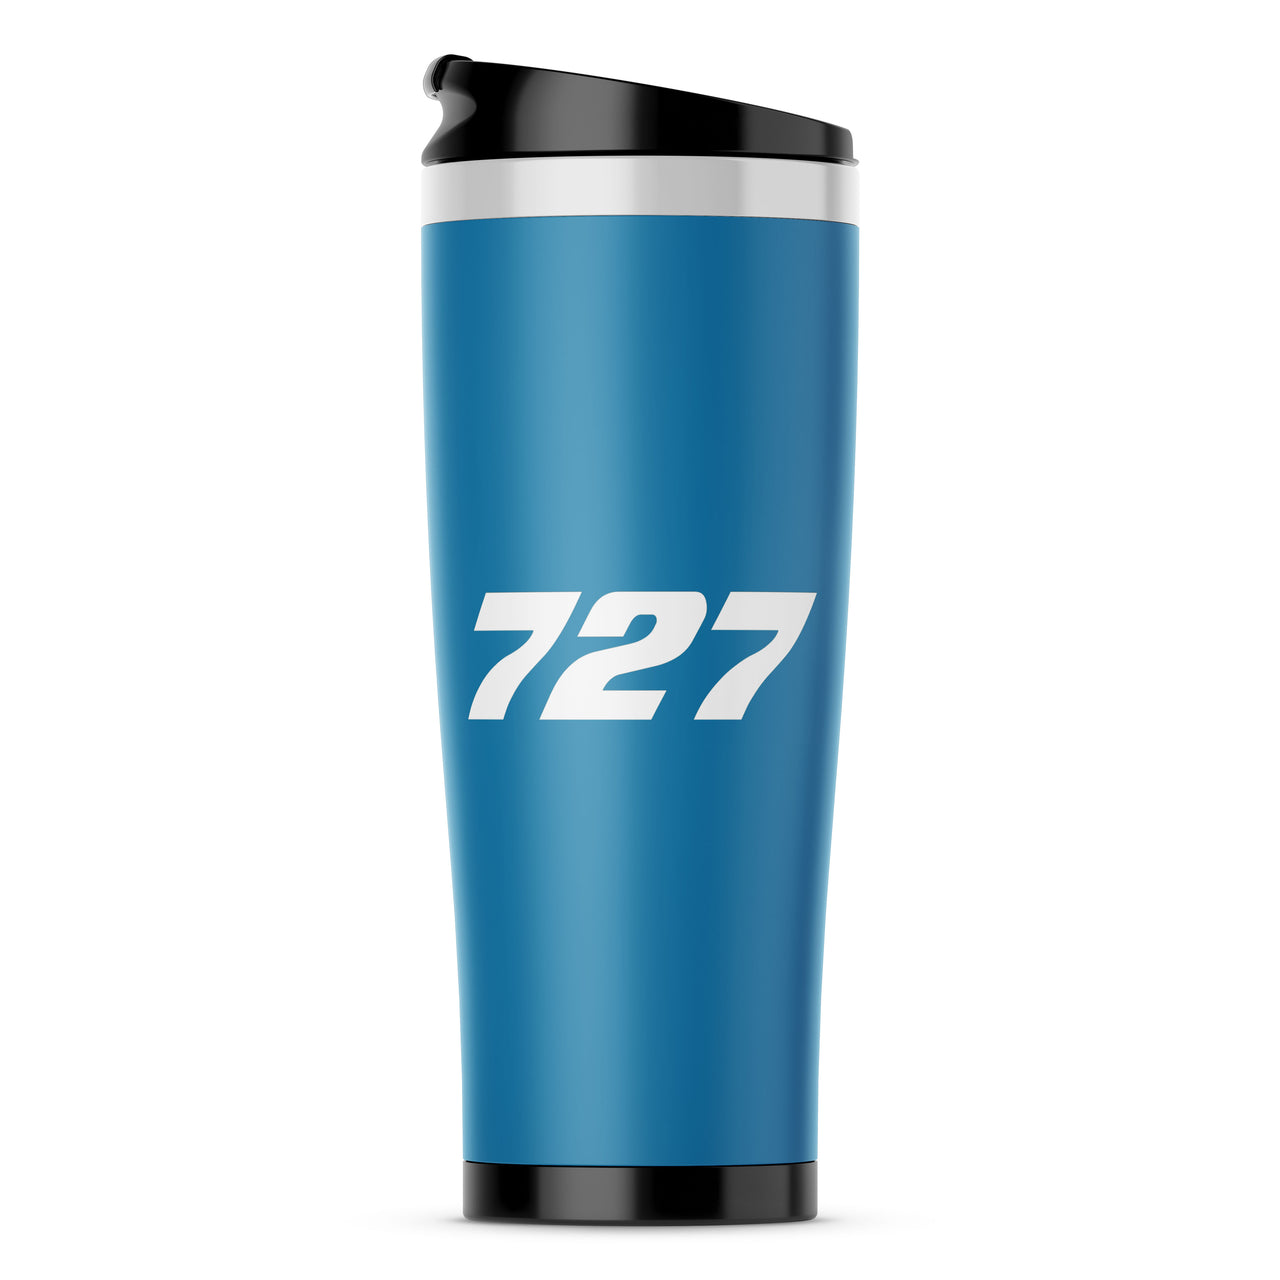 727 Flat Text Designed Travel Mugs